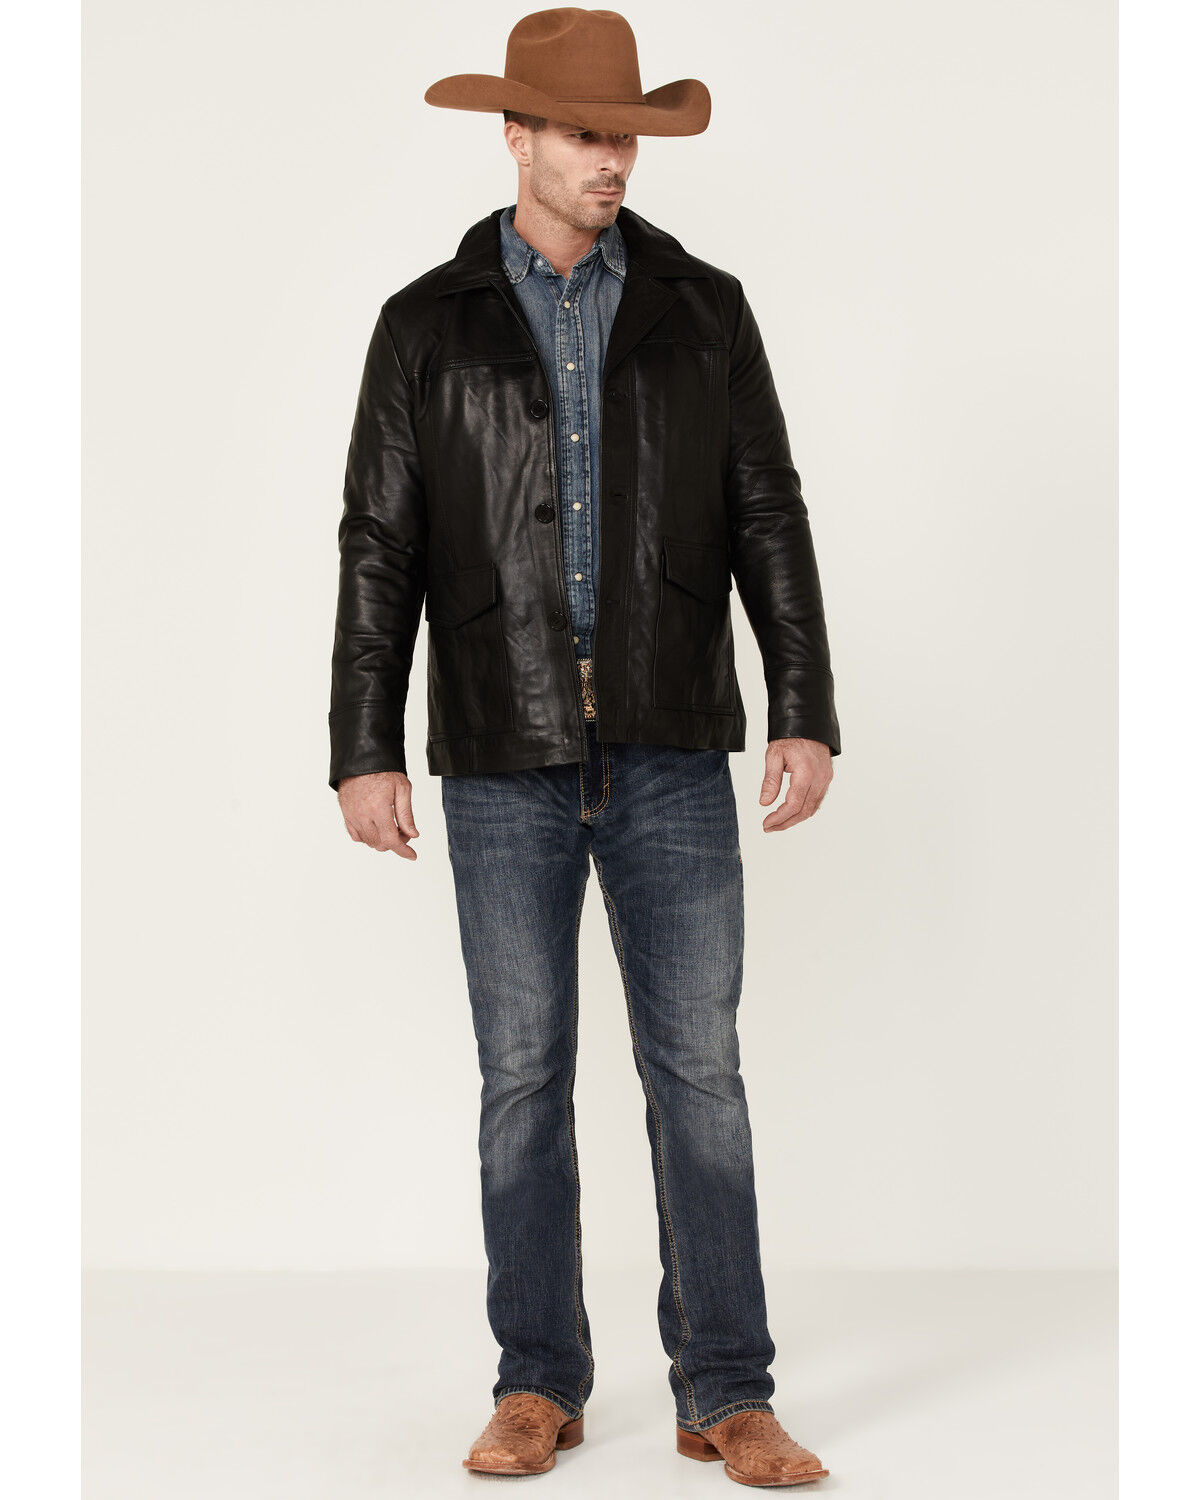 Milwaukee Leather Men’s Leather Car Coat Jacket w/ Button Front  *SFM1870 BLACK 